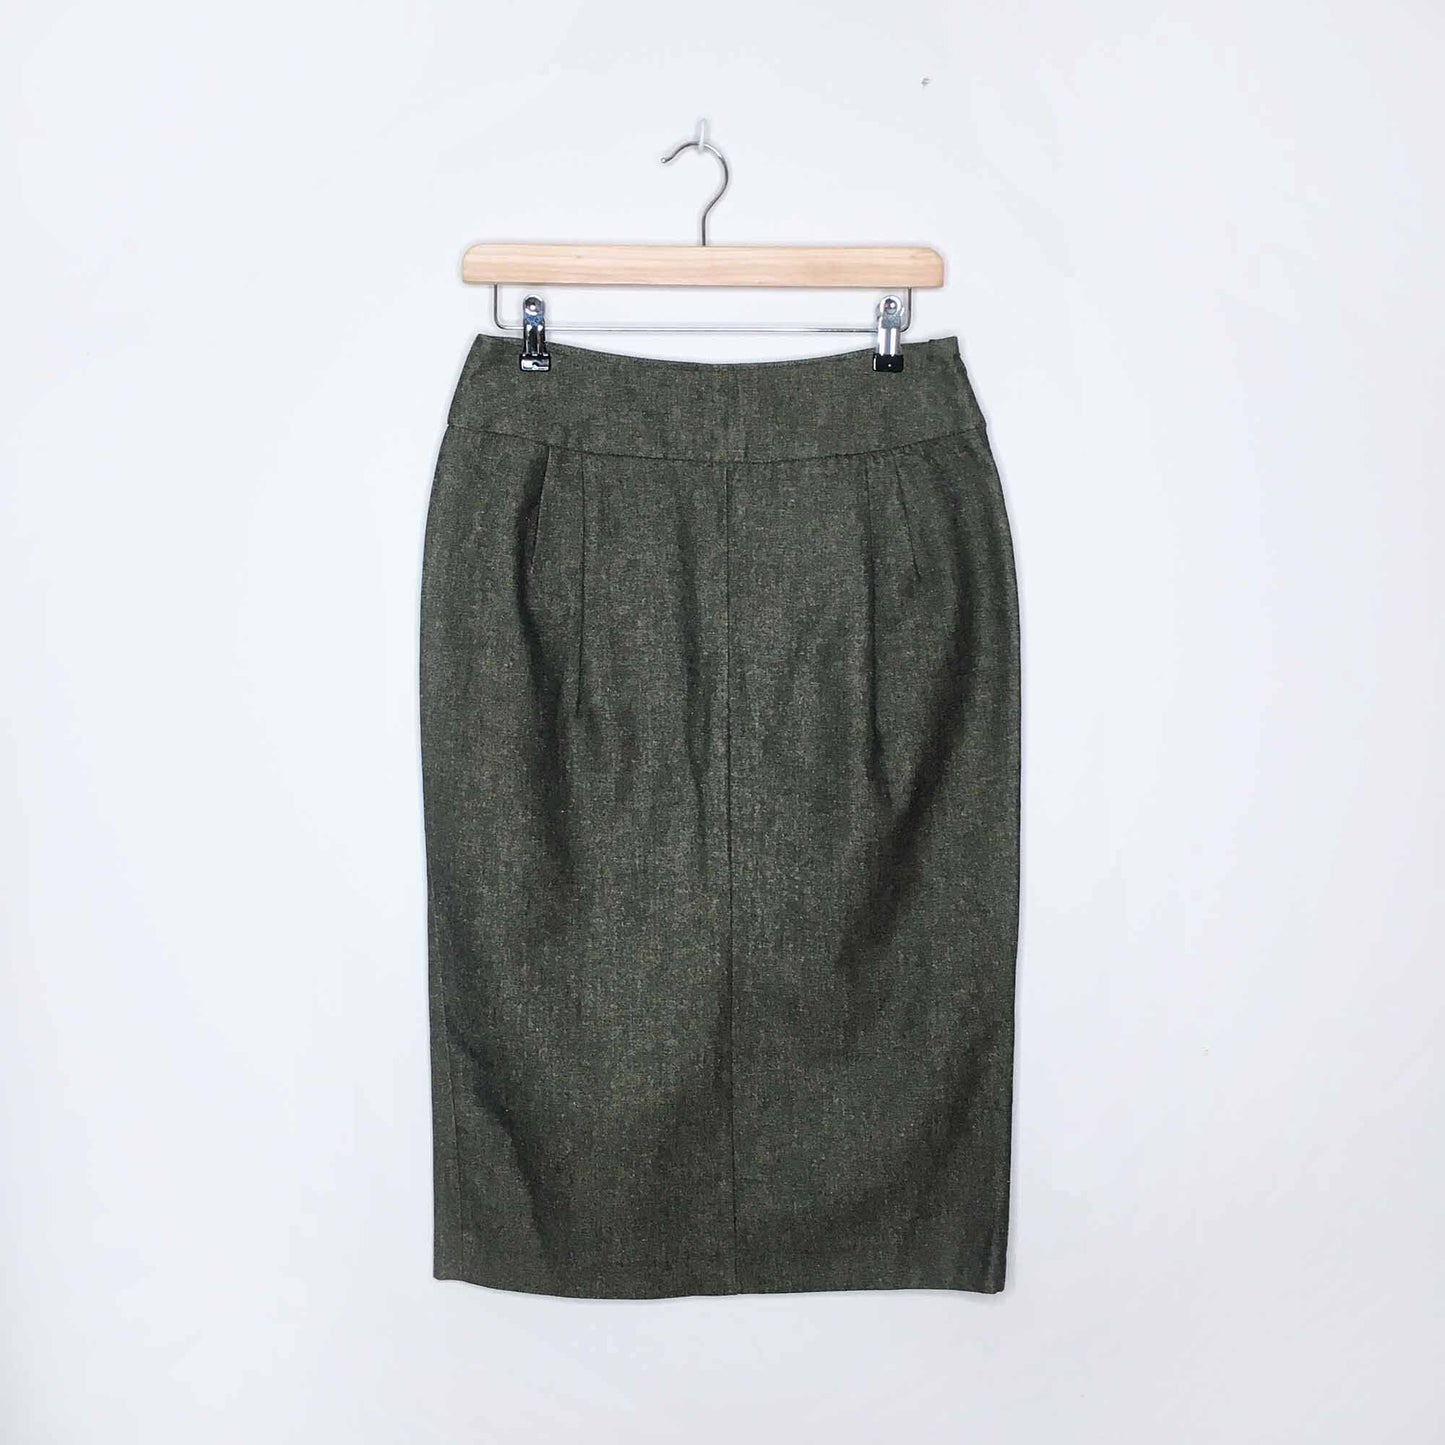 BOSS Hugo Boss pleated pencil skirt - size 6